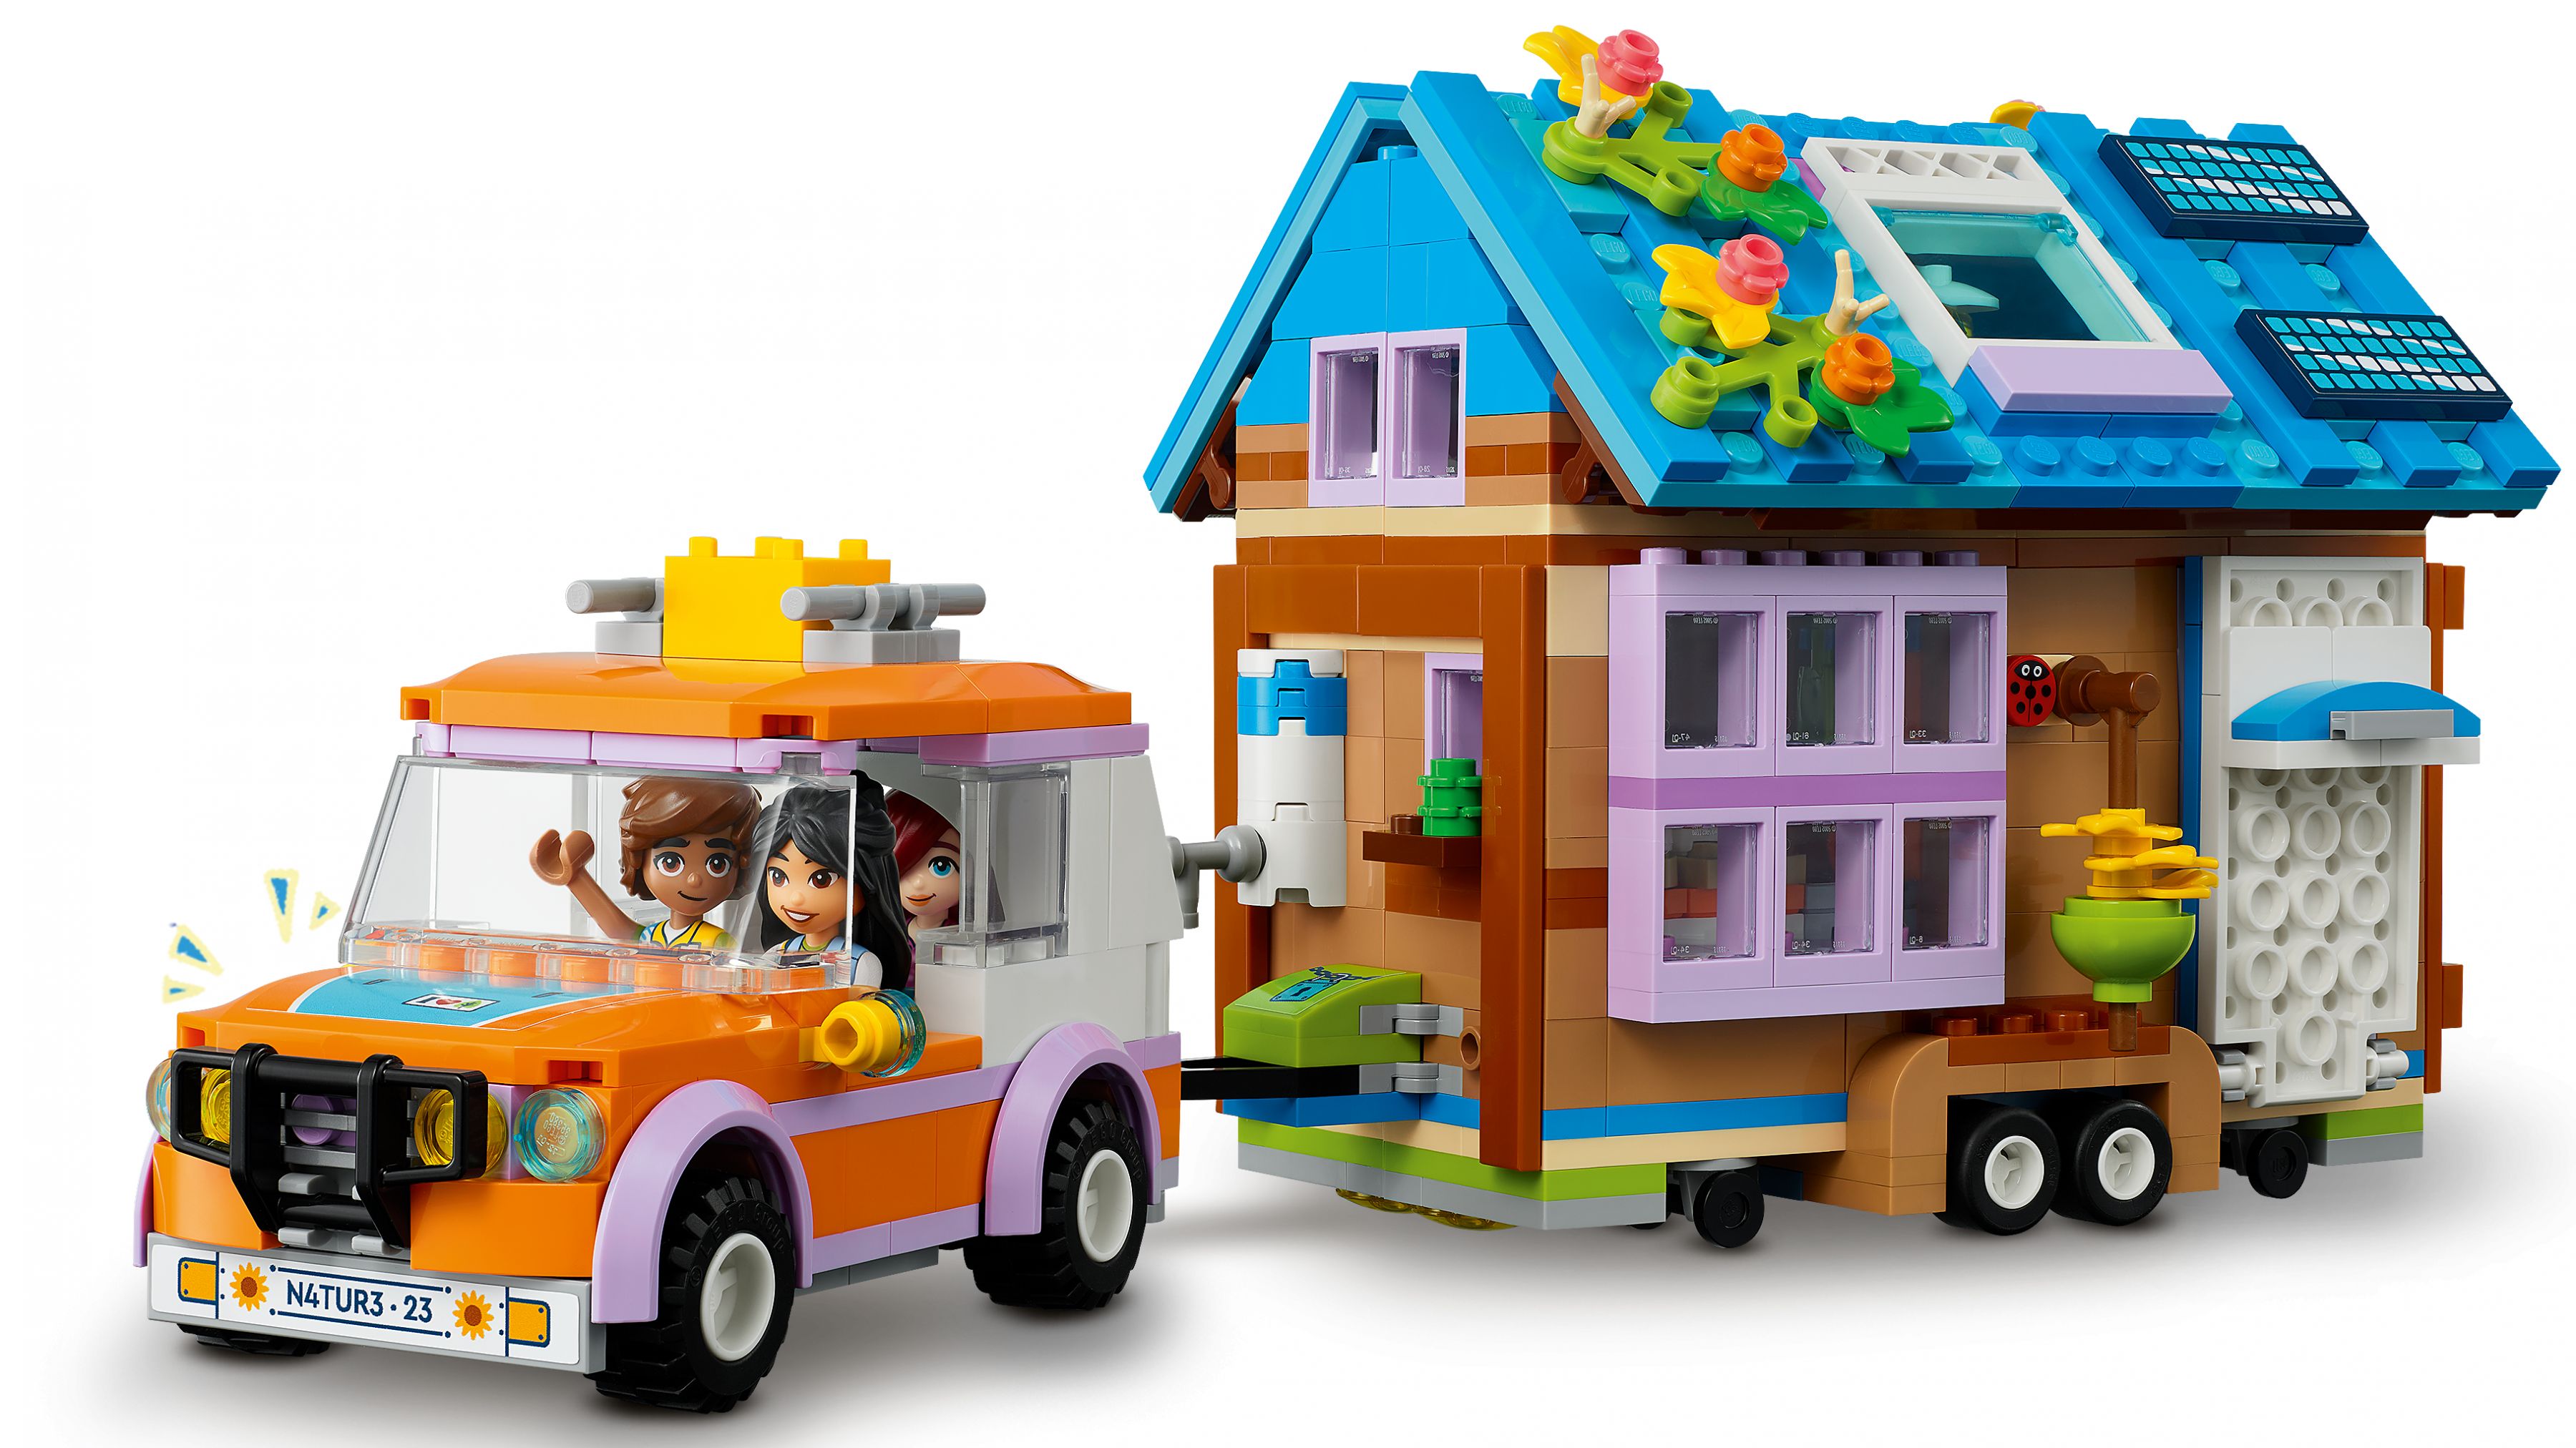 LEGO Friends 41735 Mobiles Haus LEGO_41735_WEB_SEC04_NOBG.jpg